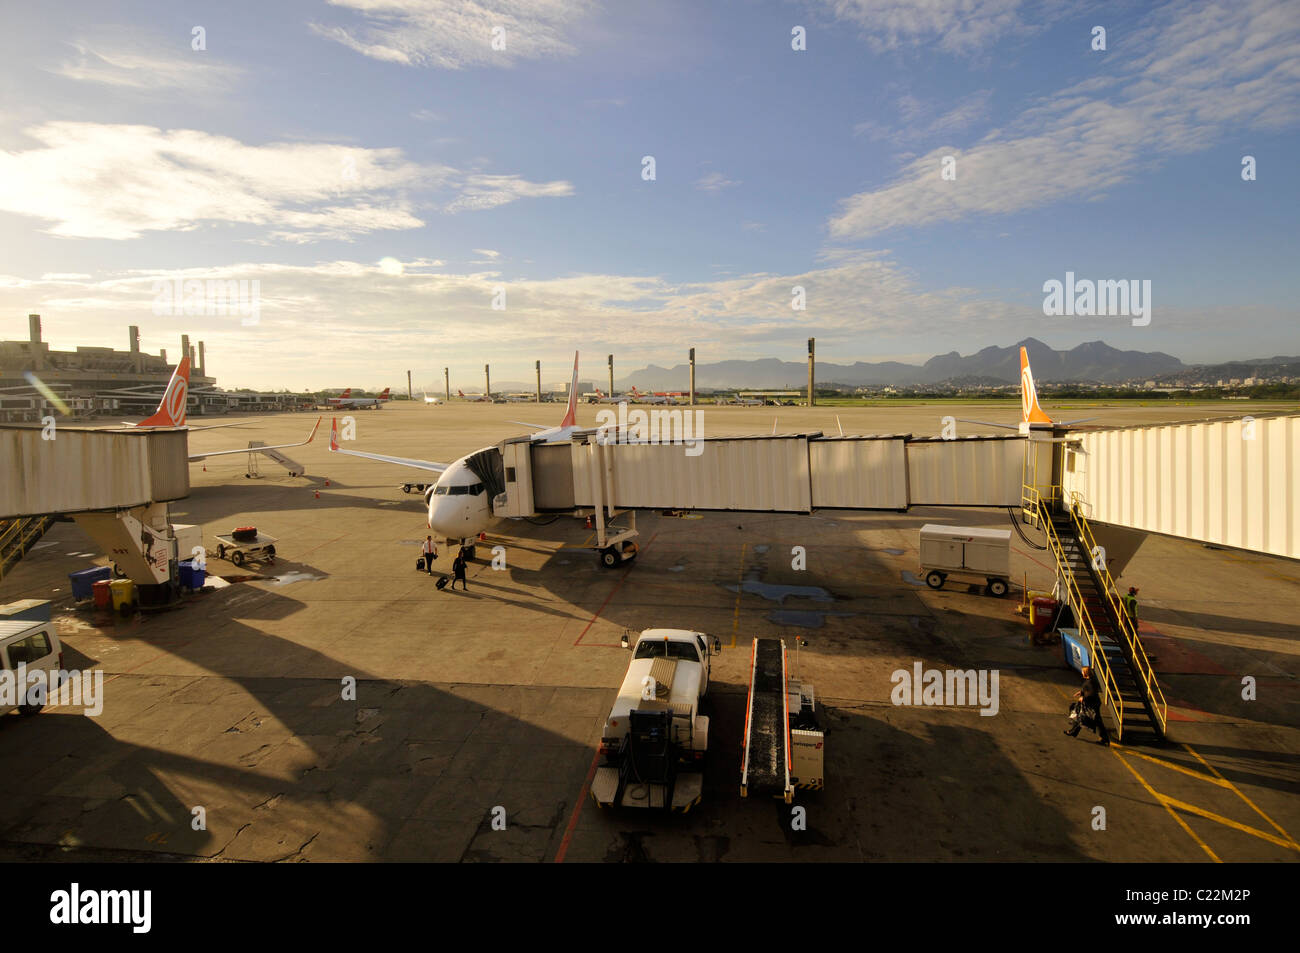 Gol Airline airplanes parked on tarmac, Galeao or Tom Jobim International Airport, Rio de Janeiro, Brazil Stock Photo